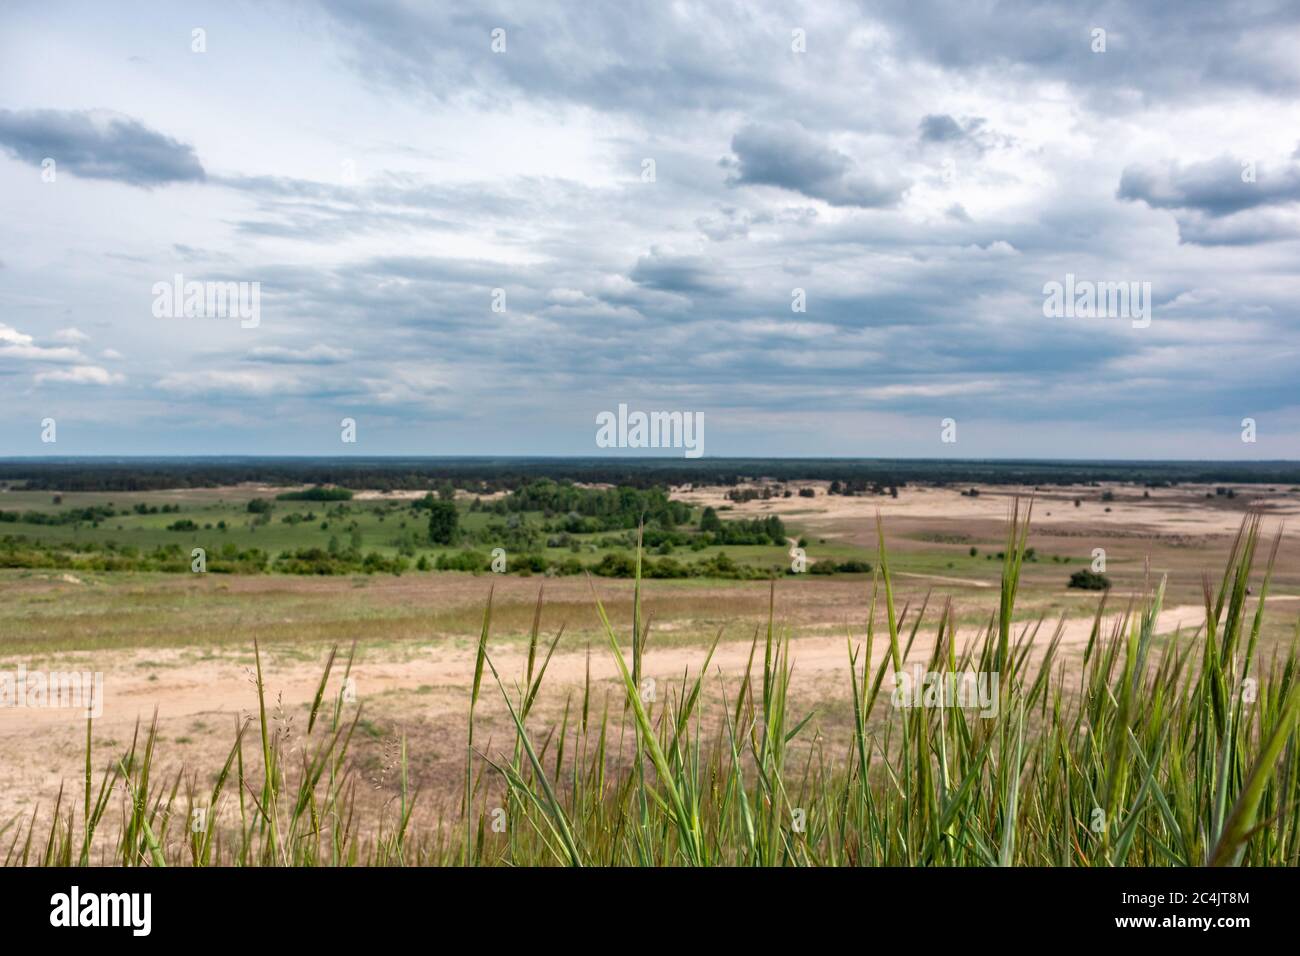 Green vivid grass with grey dramatic sky. Kitsevka desert hilly sands in Ukraine, Kharkiv region landscape Stock Photo